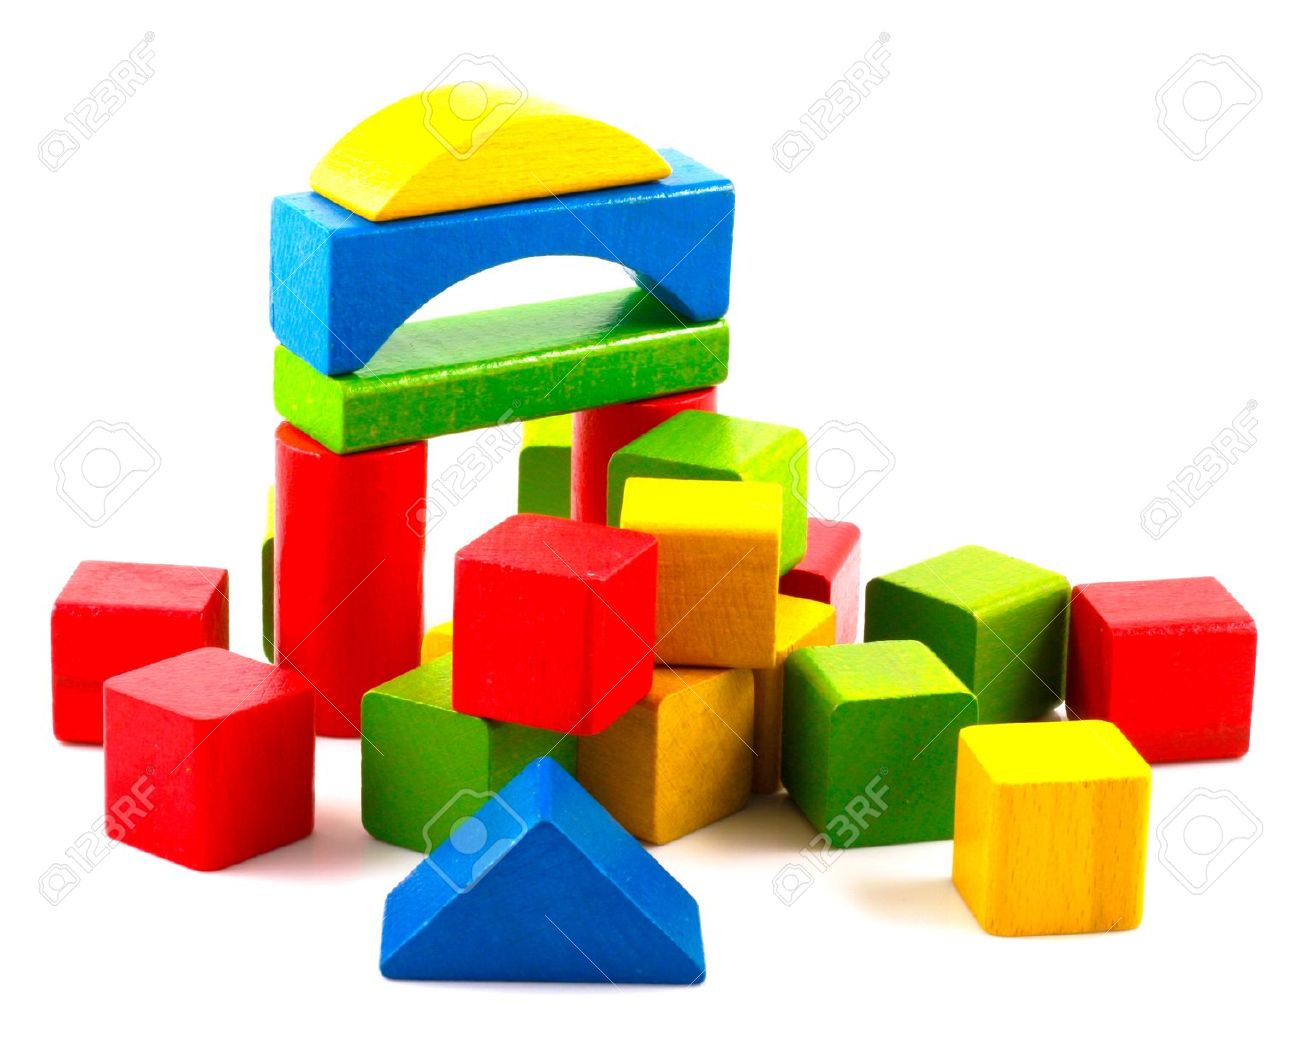 blocks clipart tower lego